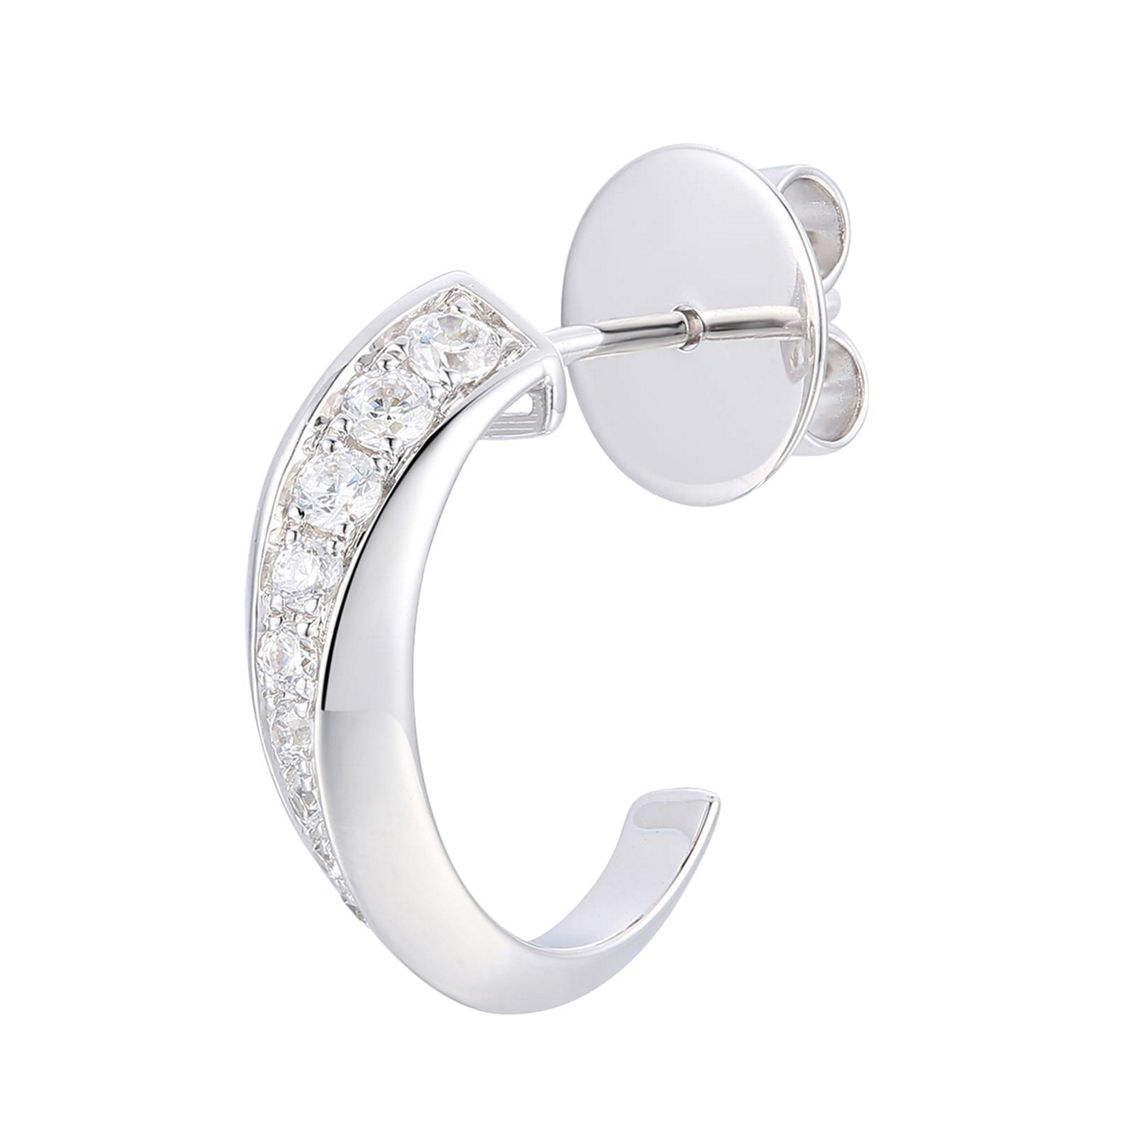 KGK 14K White Gold 0.39cttw Round cut Diamond Earring - Image 2 of 3